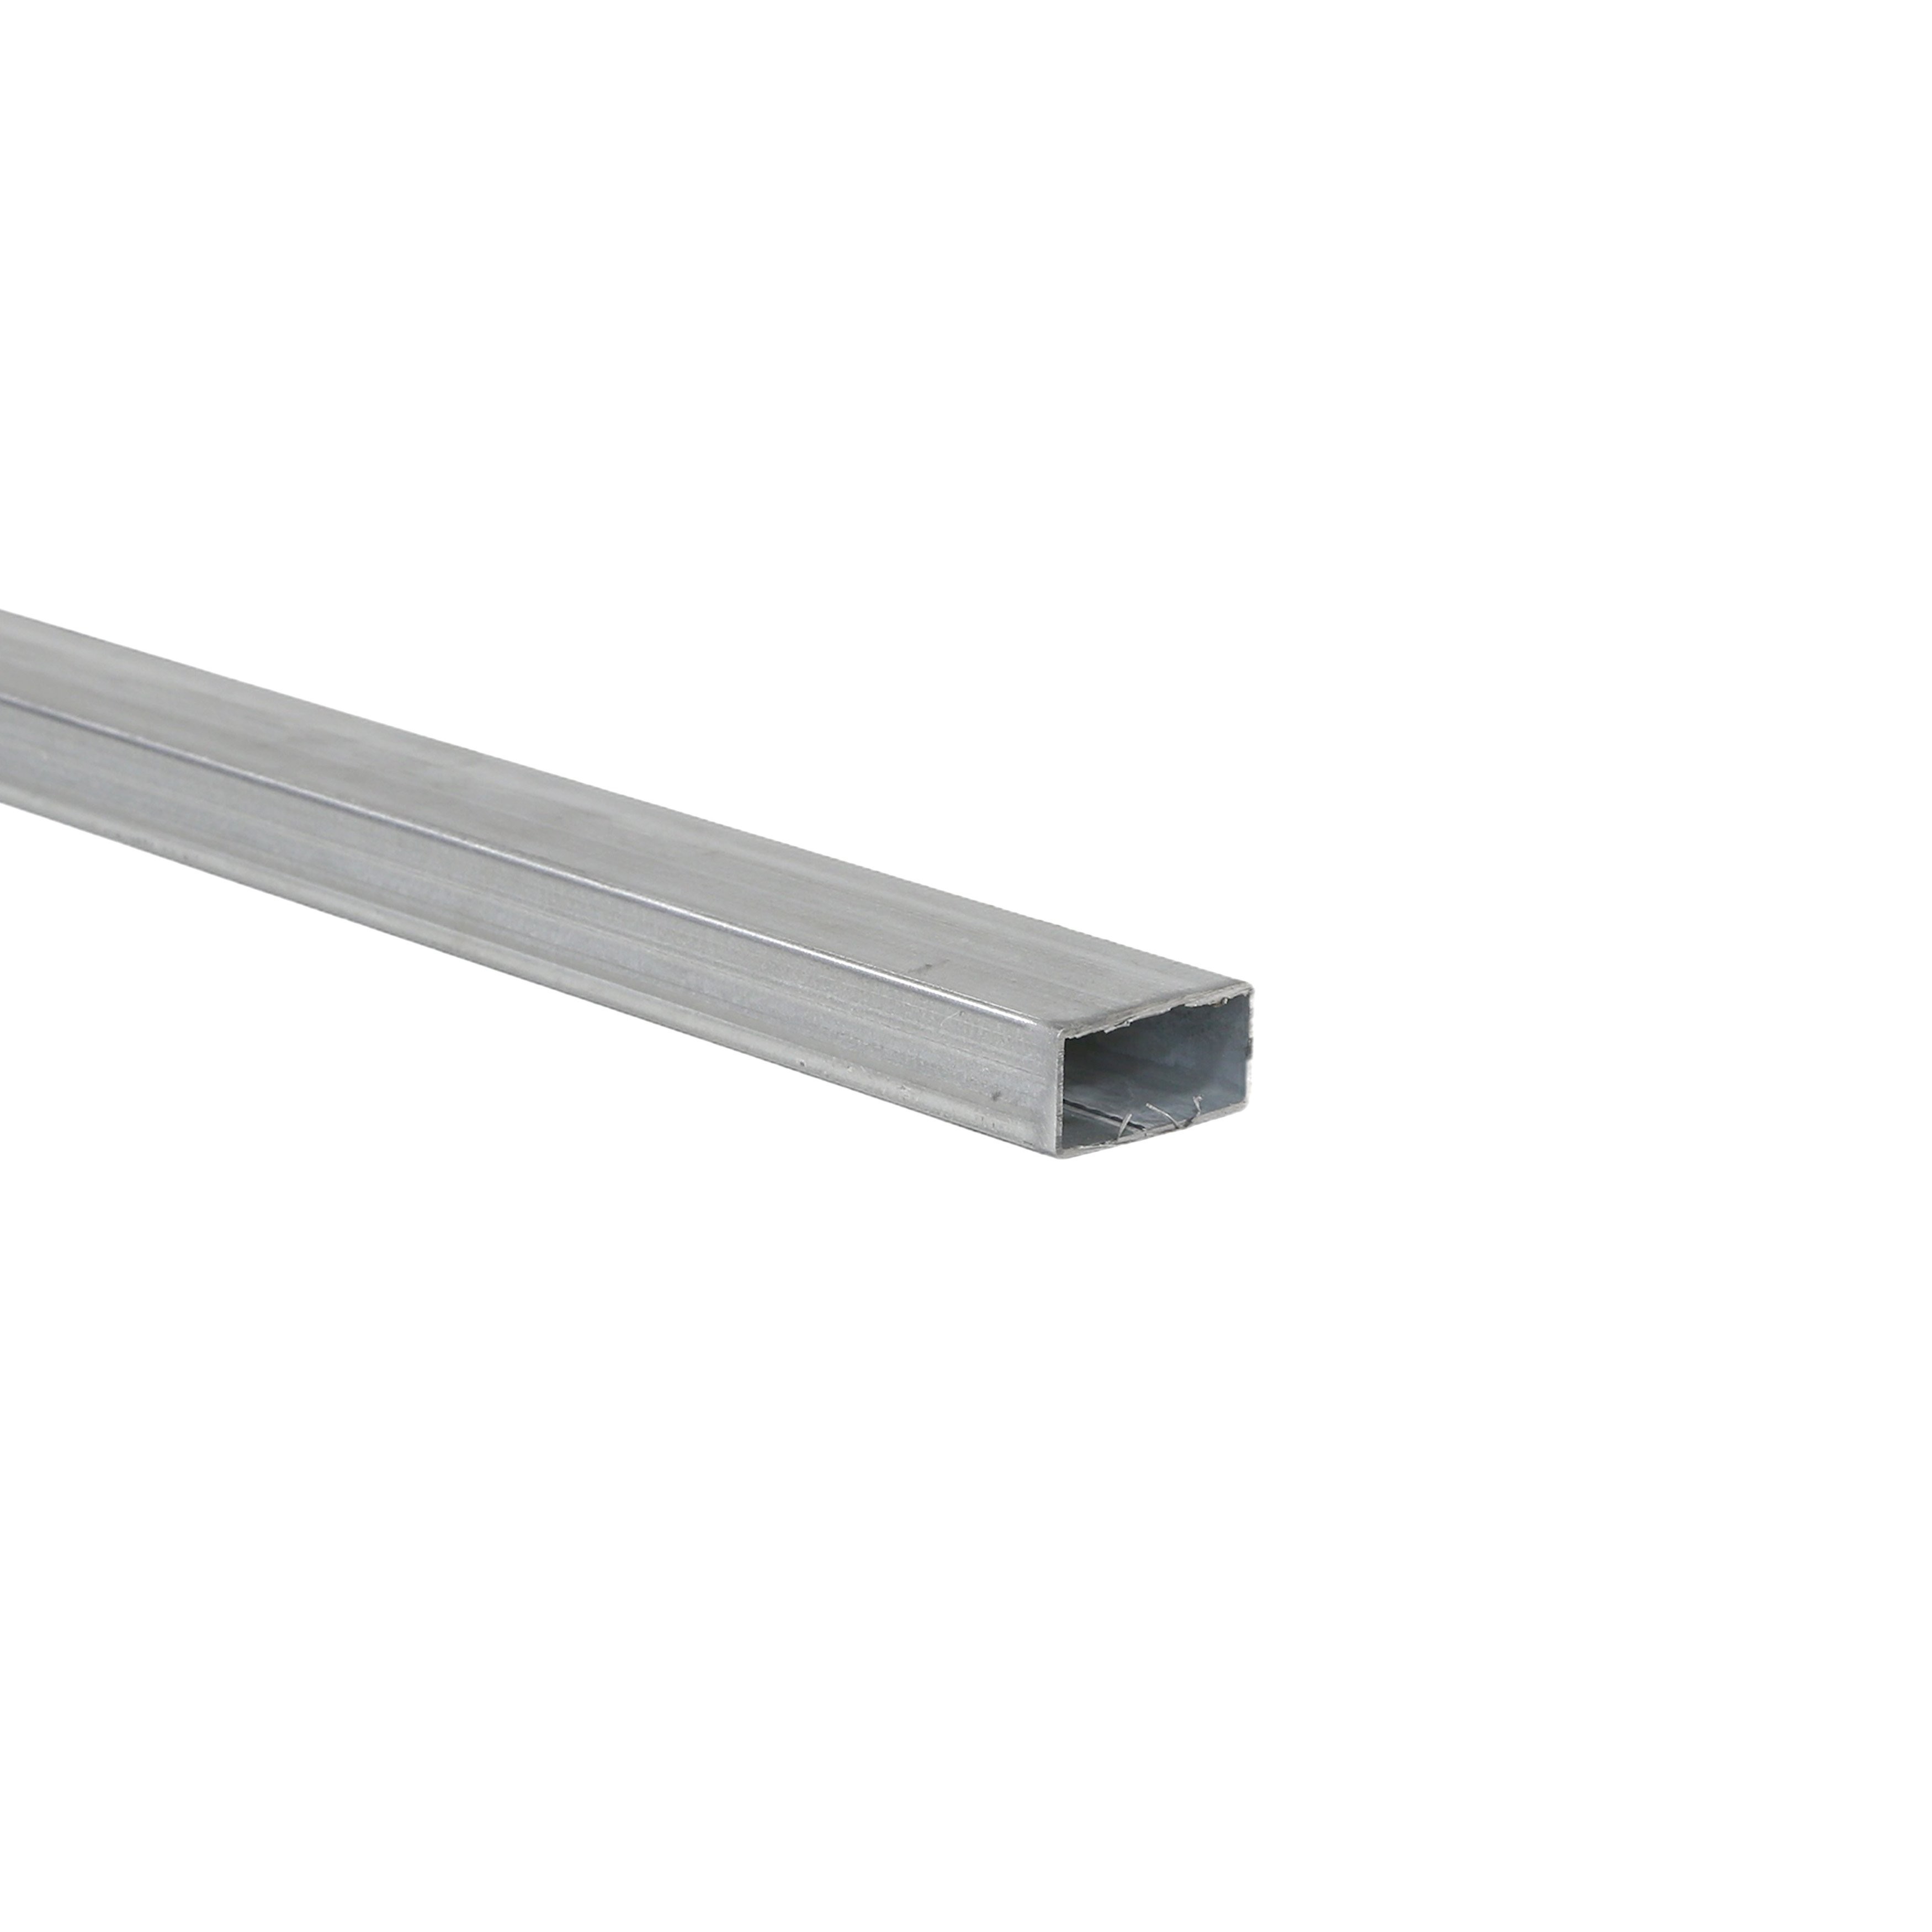 4' Long x 1 x 2 Galvanized Steel Tubing (0.0625 Wall) - Square